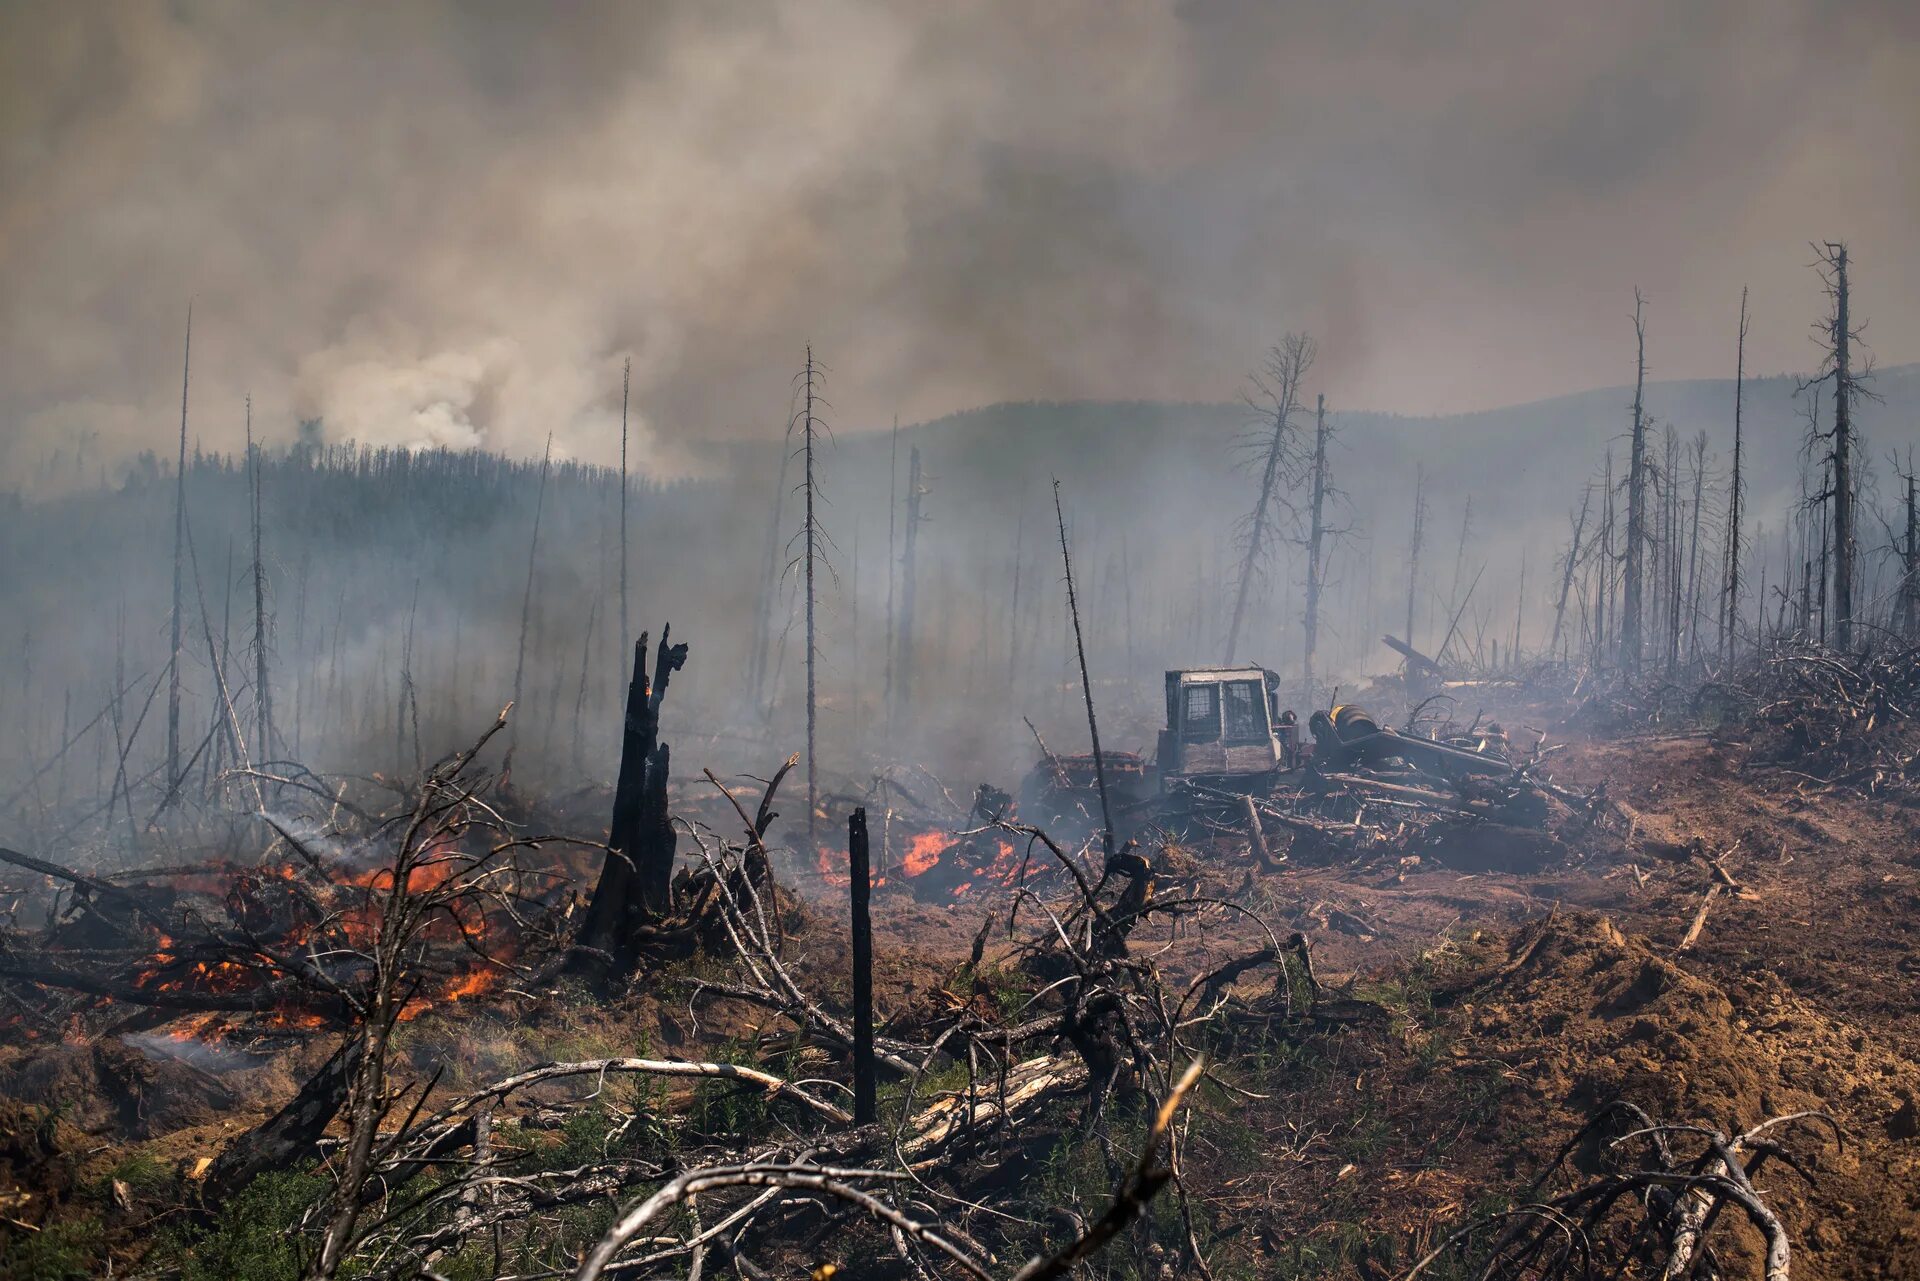 Последствия лесных пожаров. Последствия пожара в лесу. Лес после пожара. После лесного пожара.